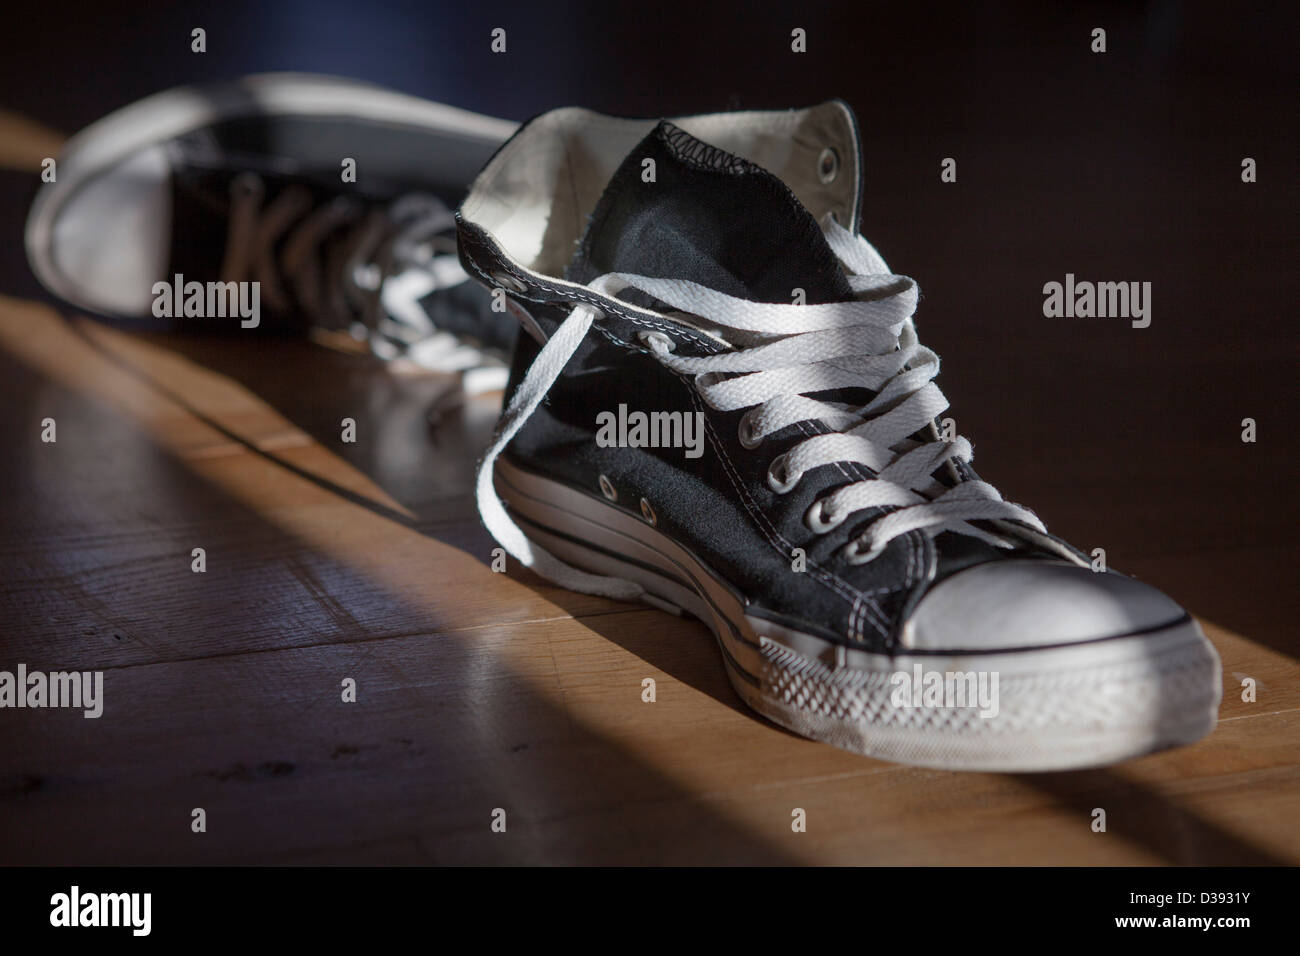 Converse laufschuhe -Fotos und -Bildmaterial in hoher Auflösung – Alamy